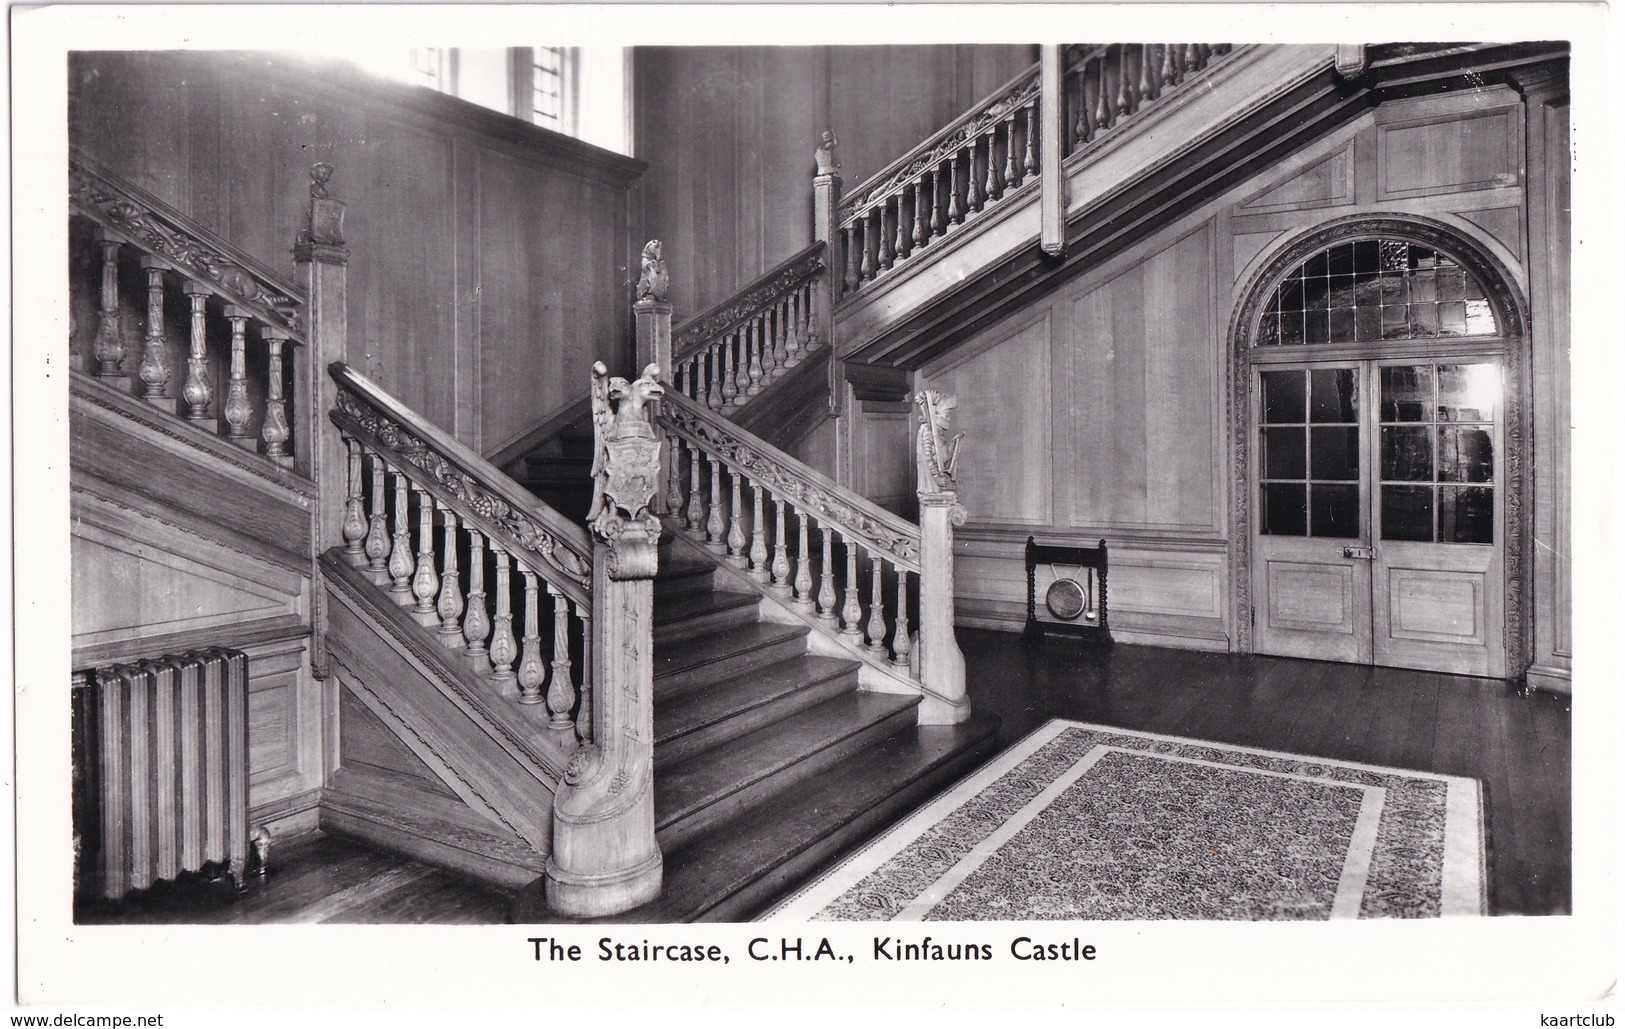 The Staircase, C.H.A., Kinfauns Castle - (Perth, Scotland) - Perthshire